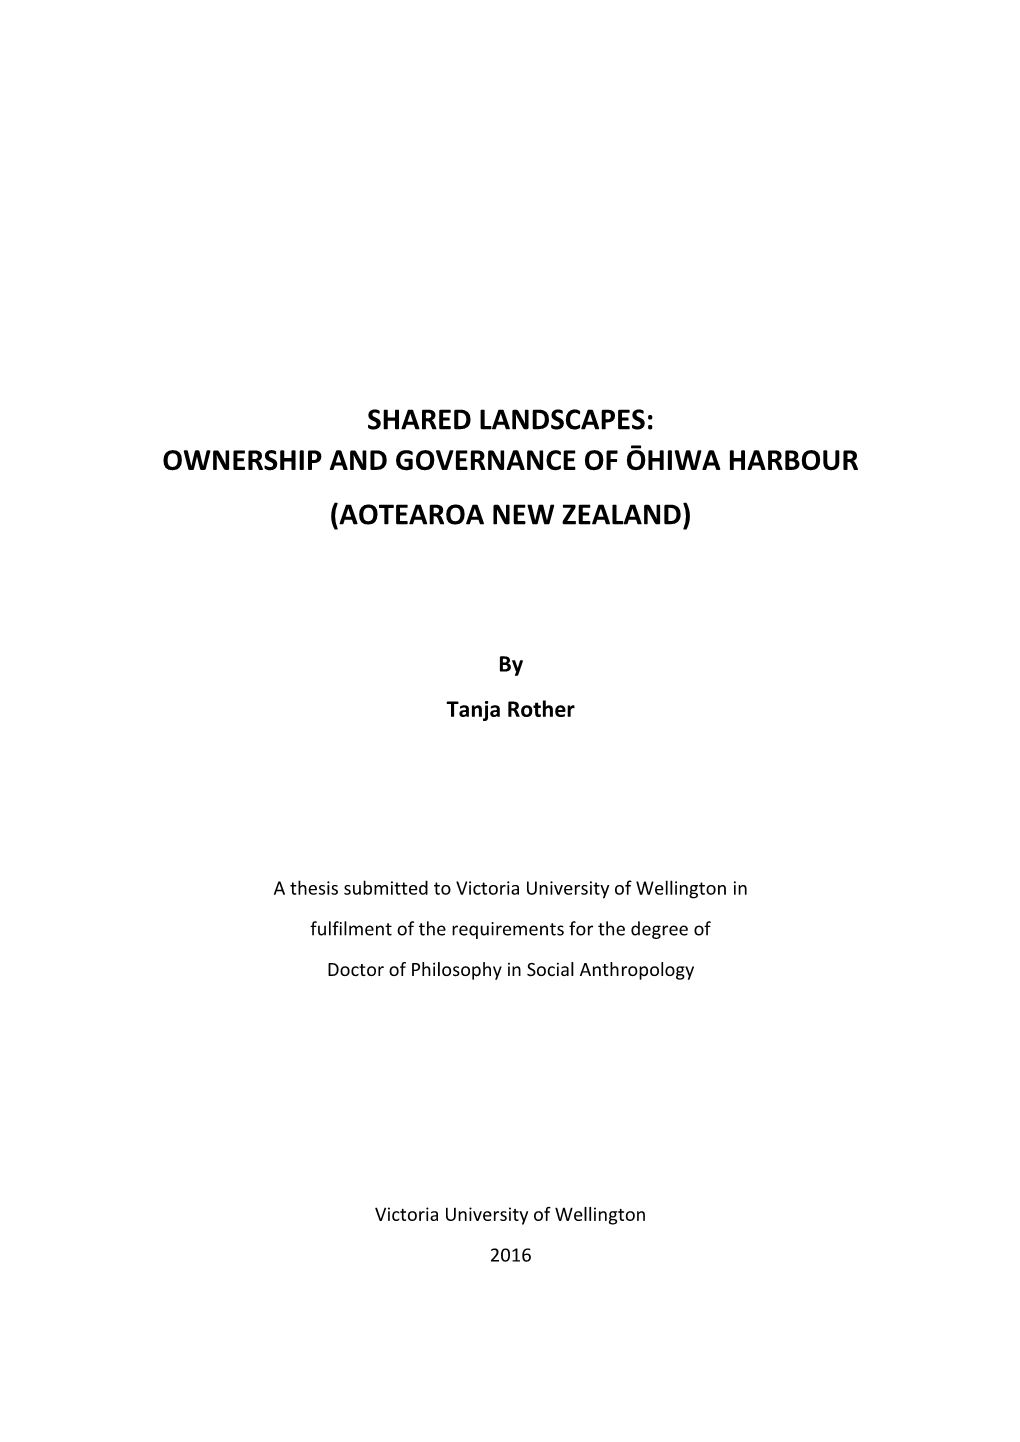 Ownership and Governance of Ōhiwa Harbour (Aotearoa New Zealand)